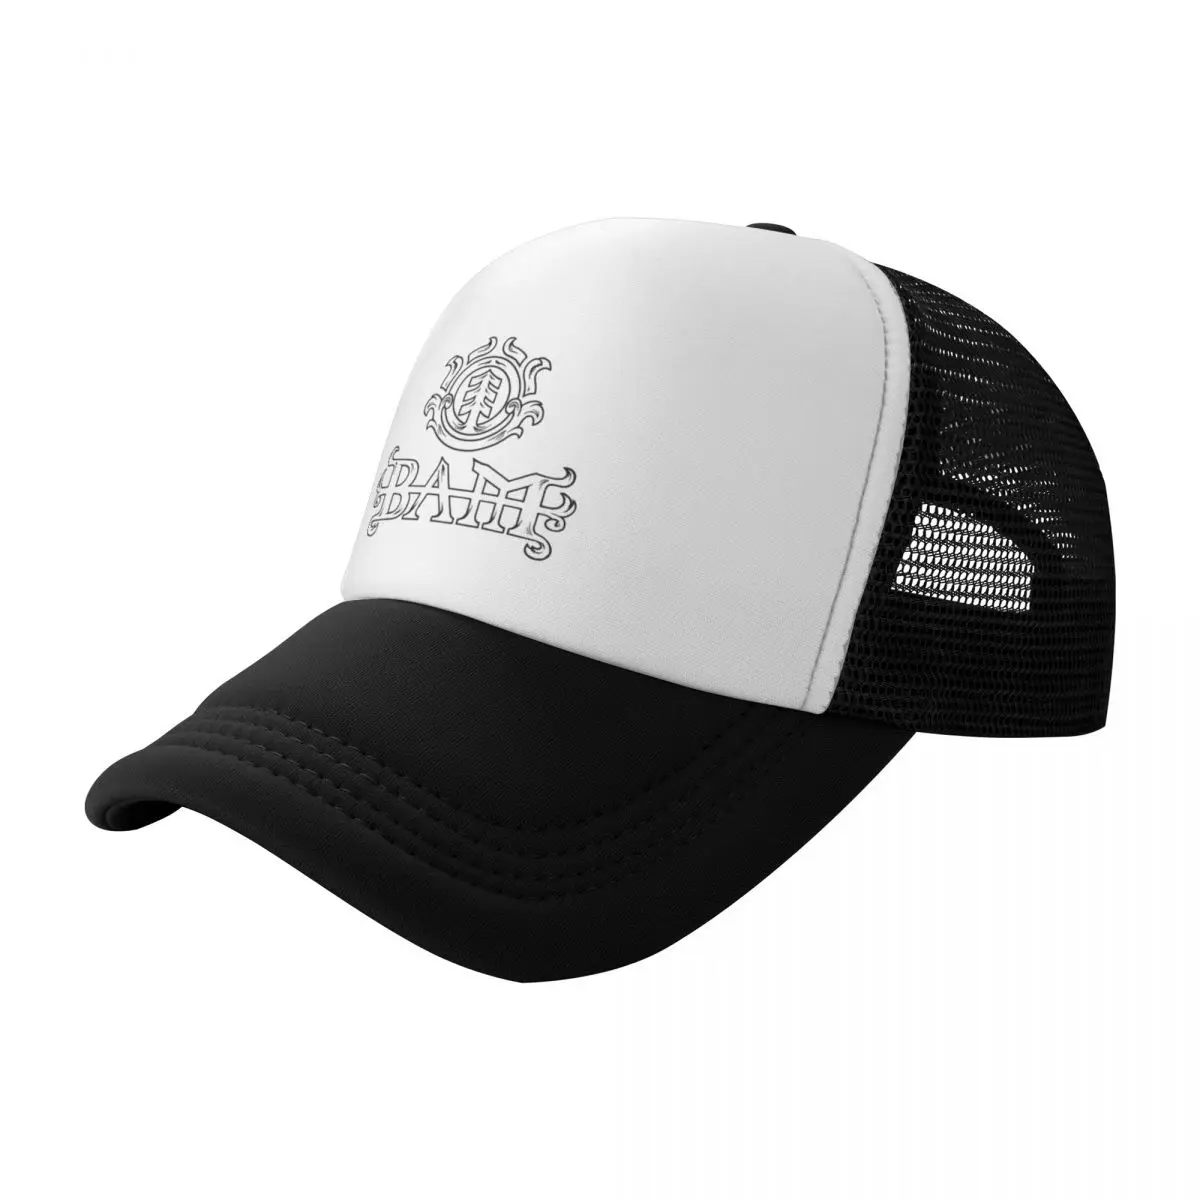 Bam! (White _amp_ Purple) Baseball Cap Fishing cap funny hat derby hat Beach Outing Caps Male Women's